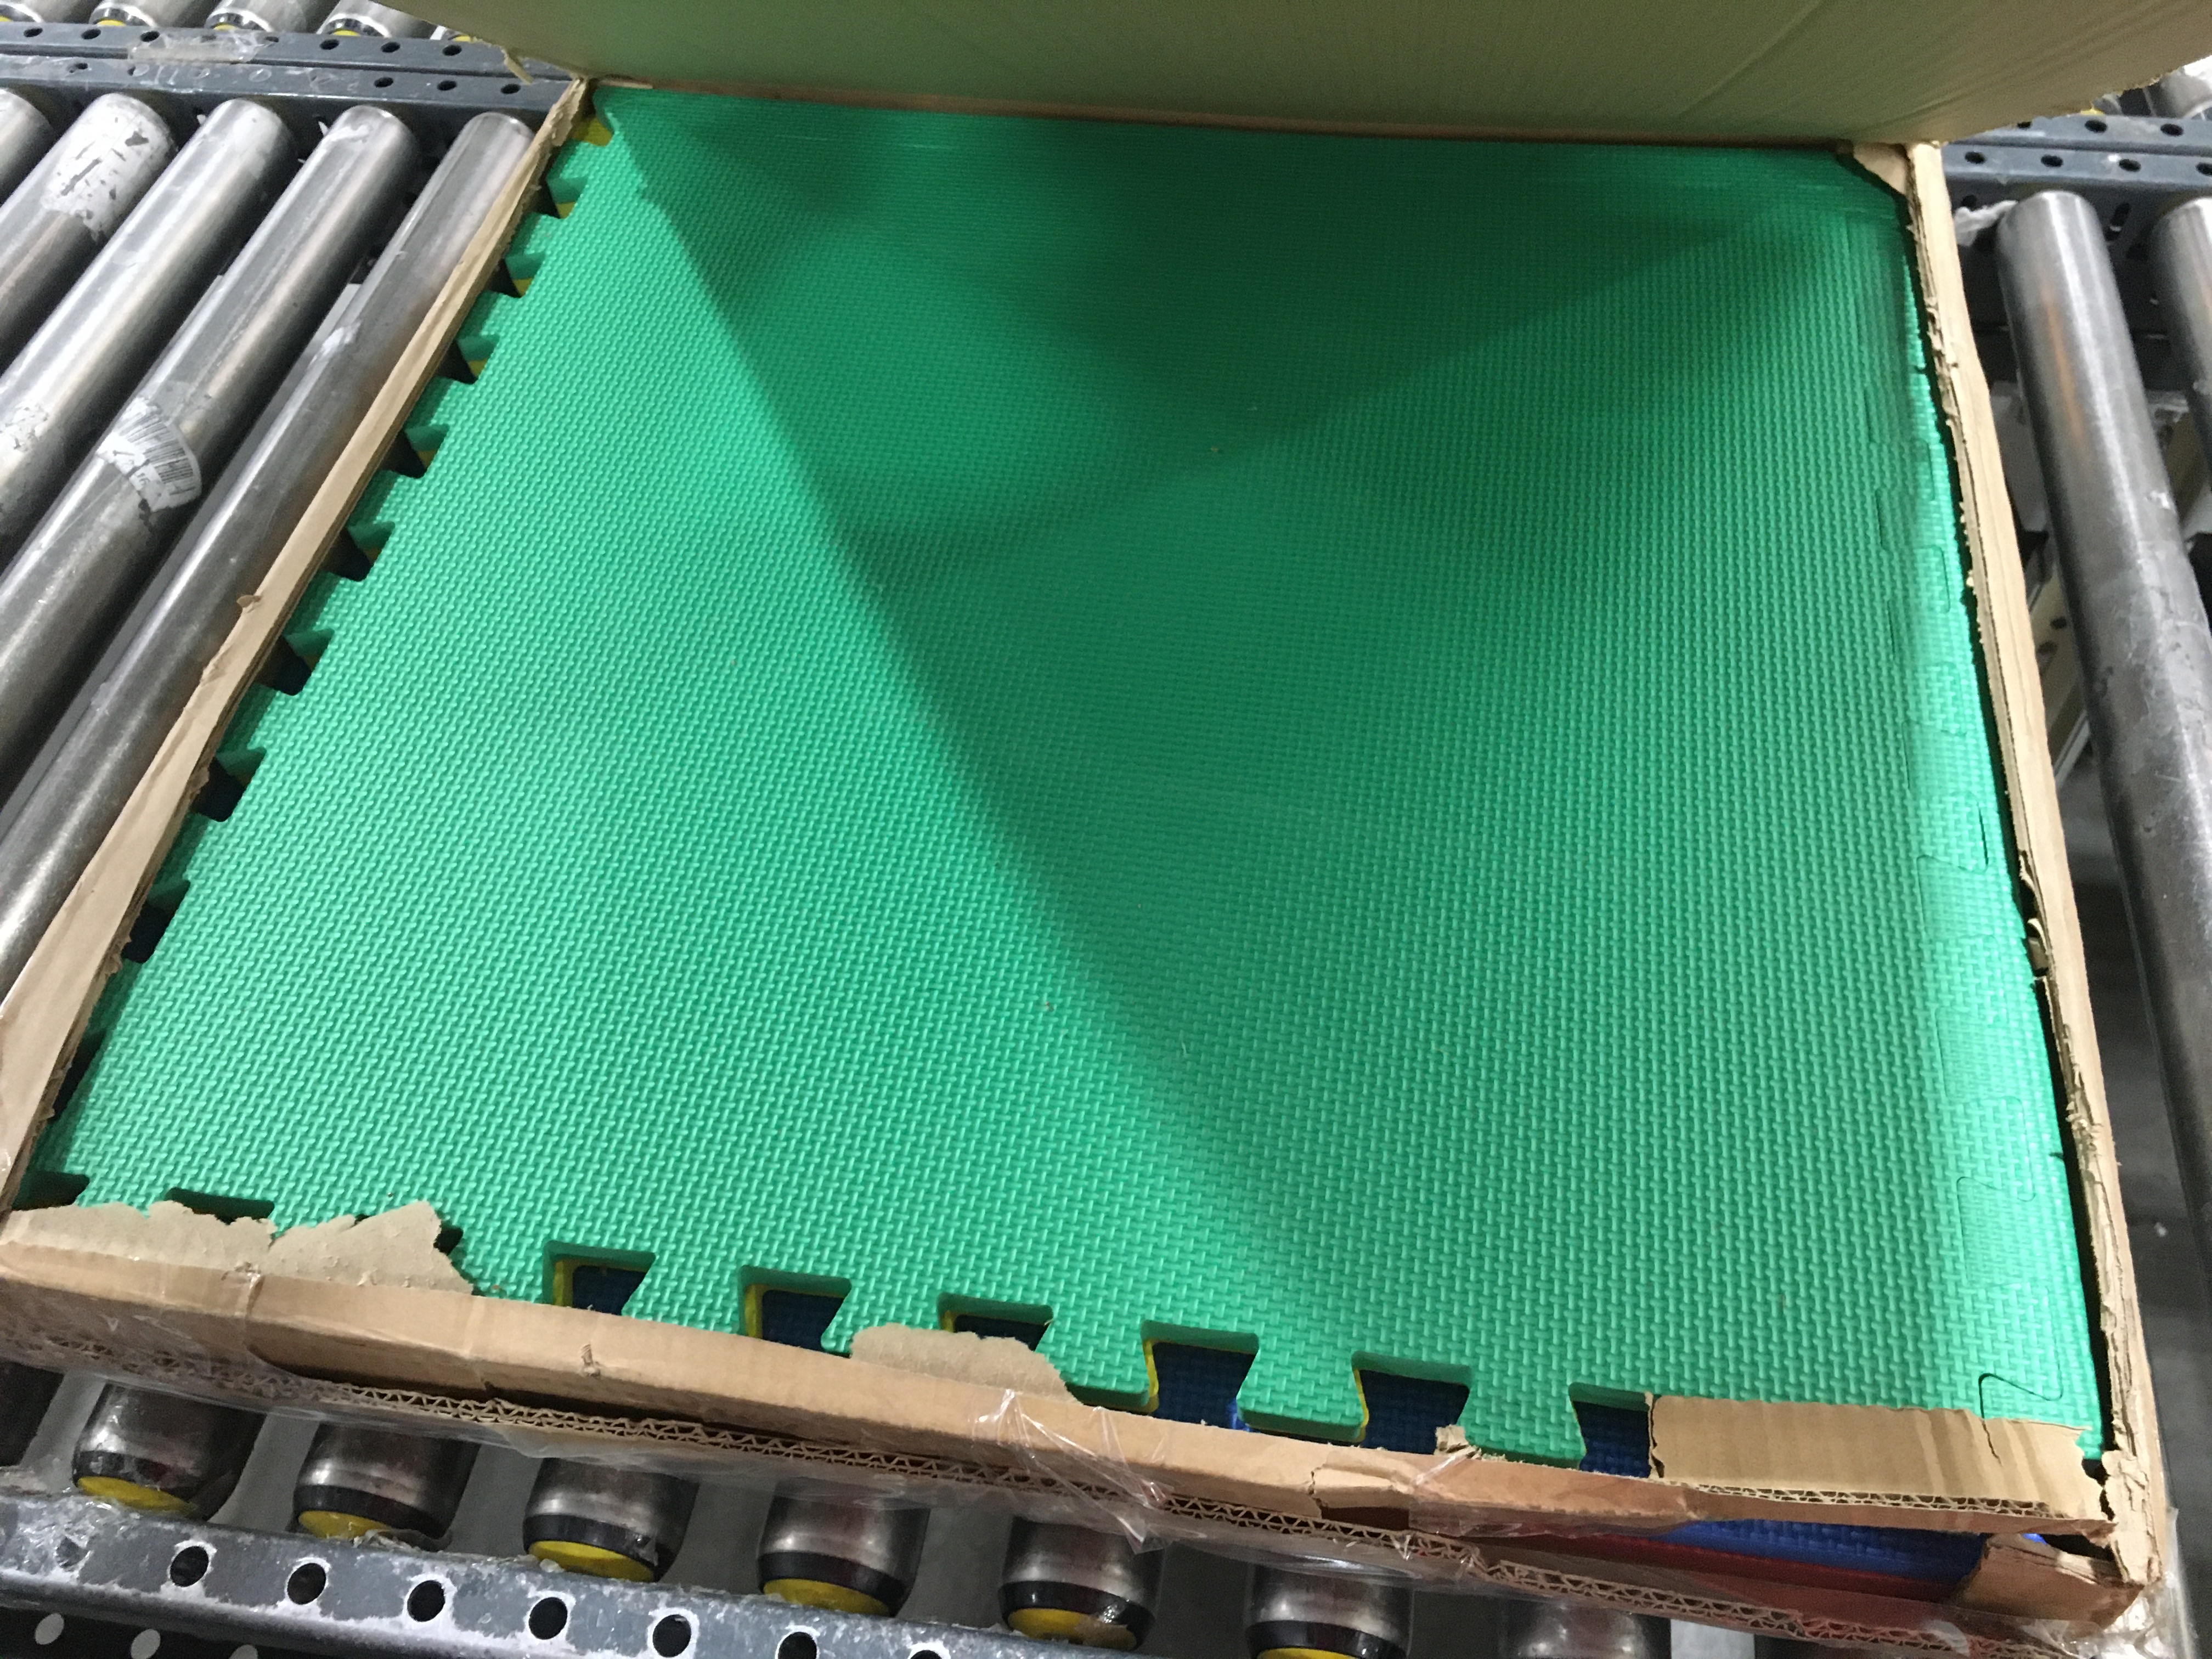 Photo 2 of Stalwart EVA Foam Mat Tiles - Interlocking Padding for Garage, Playroom, or Gym Flooring - Workout Mat or Baby Playmat Multi-colored 16 Pack-64 Sq Ft